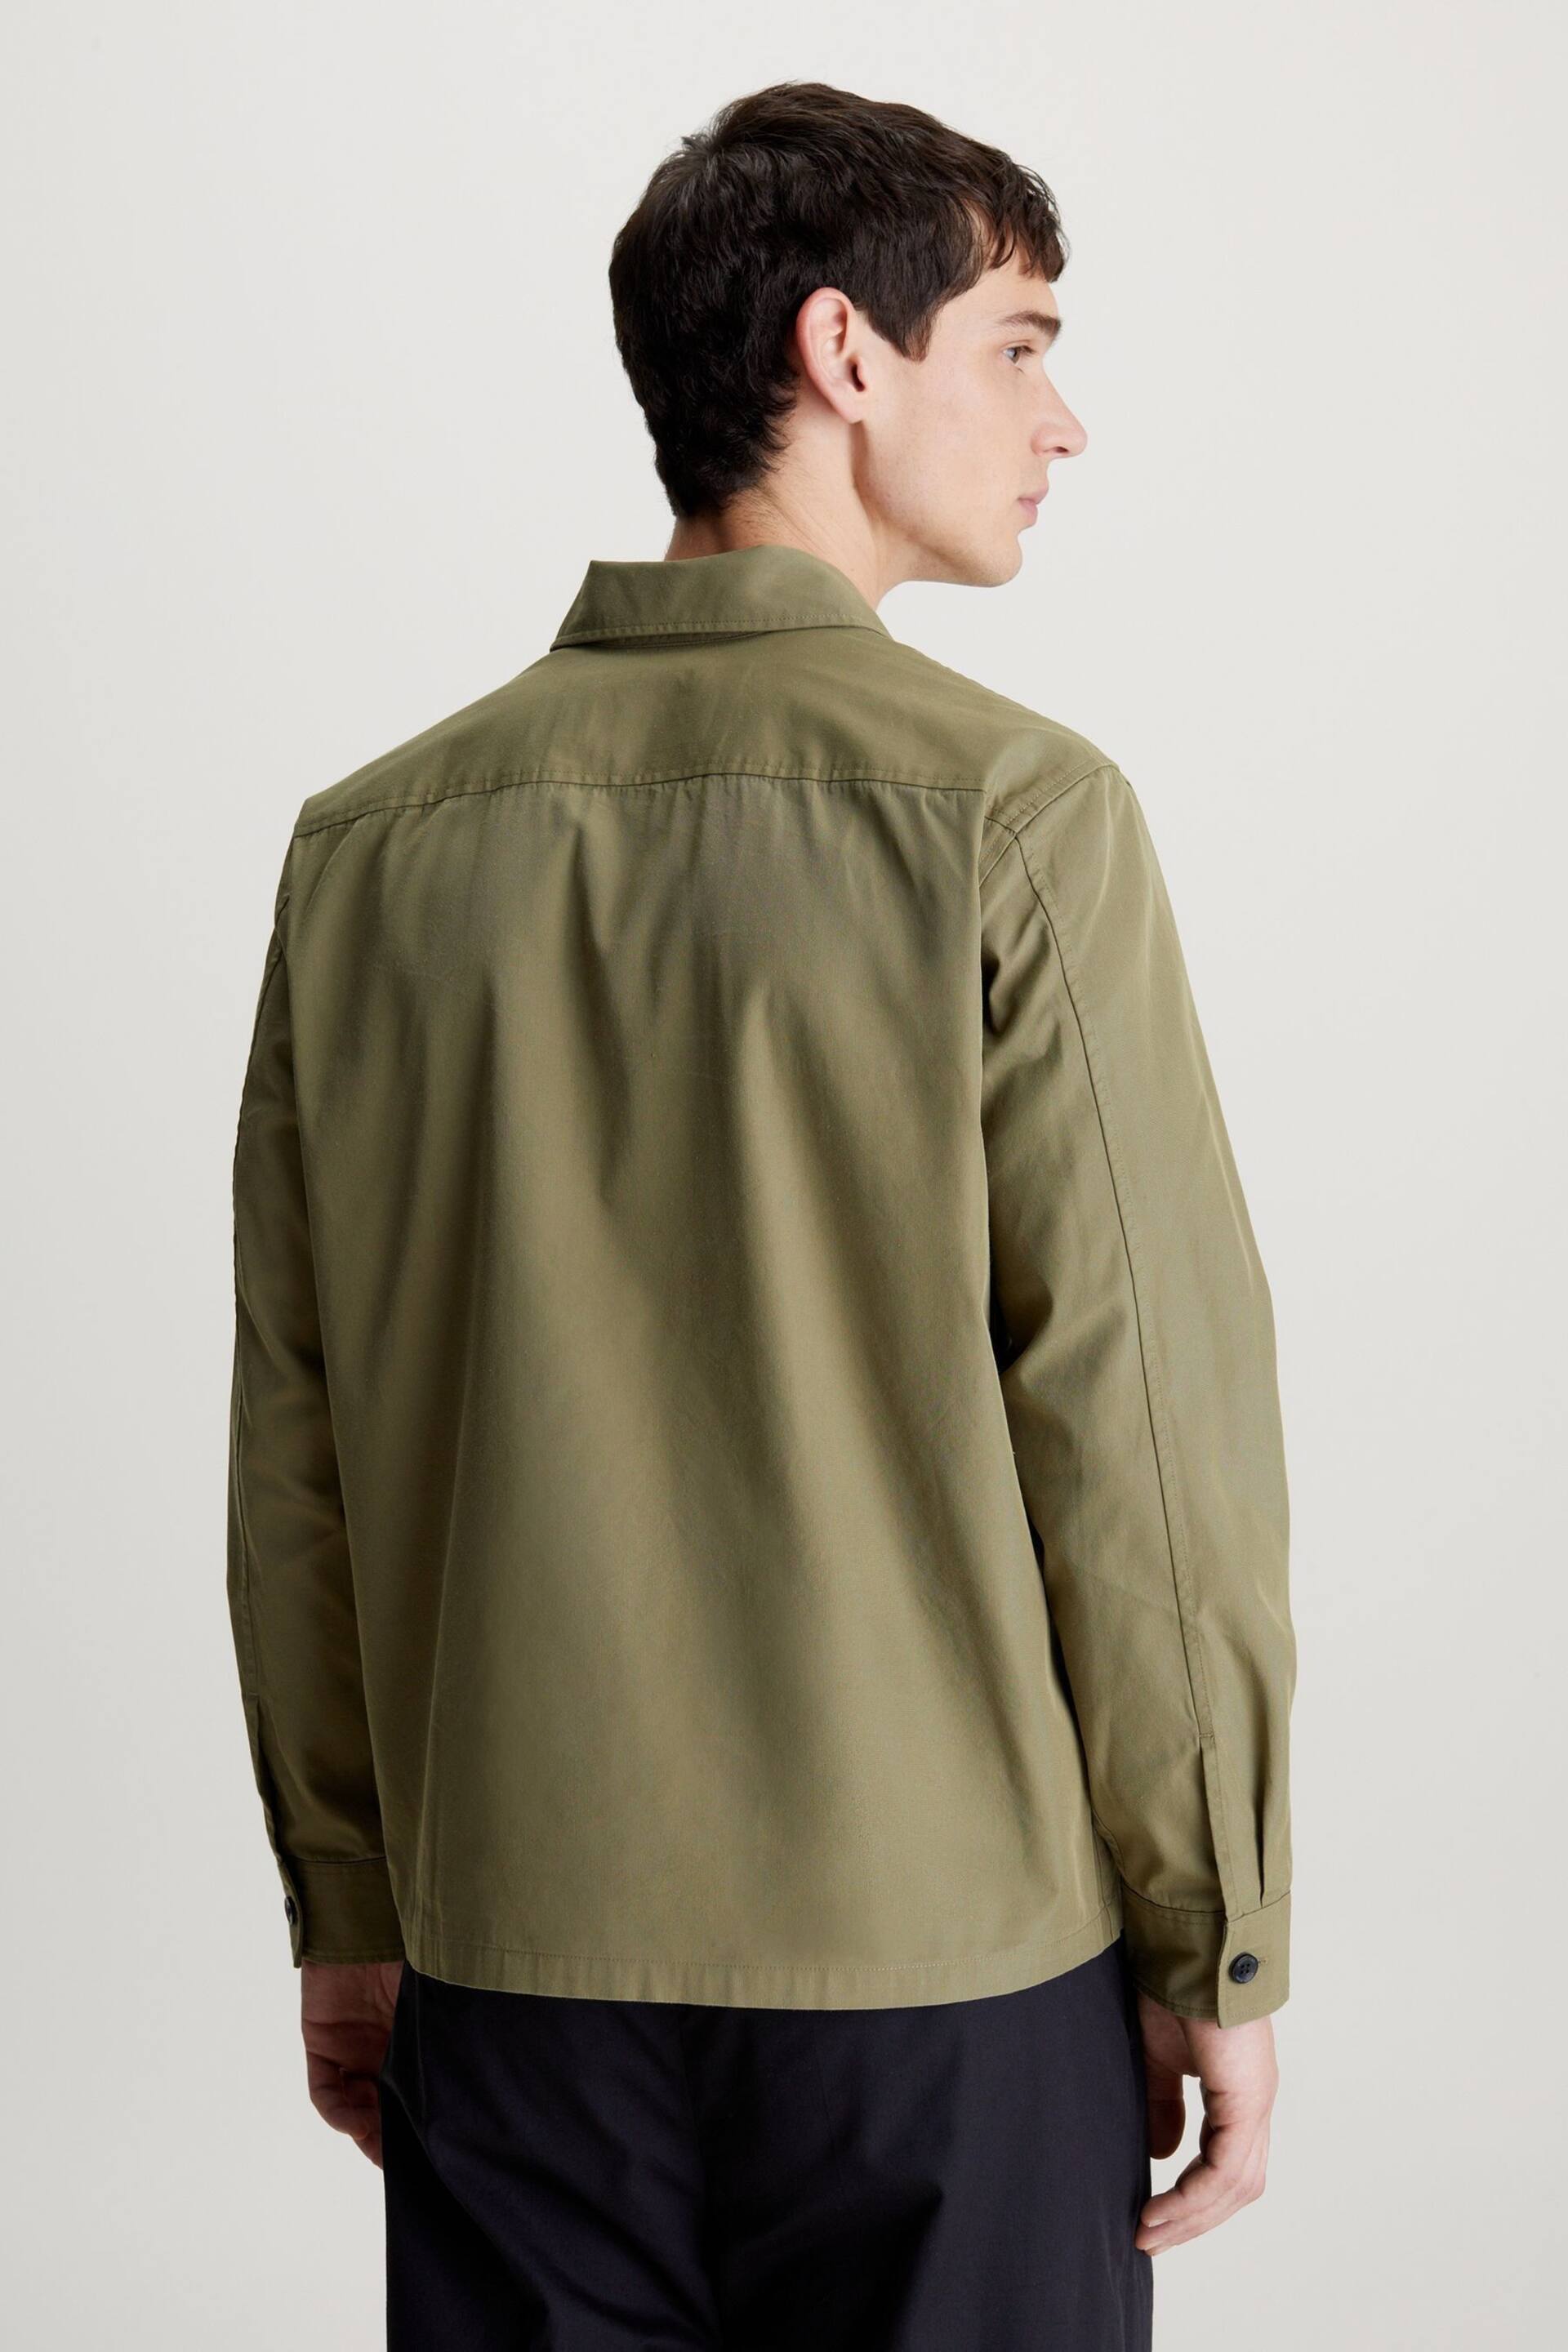 Calvin Klein Green Cargo Nylon Overshirt - Image 2 of 4